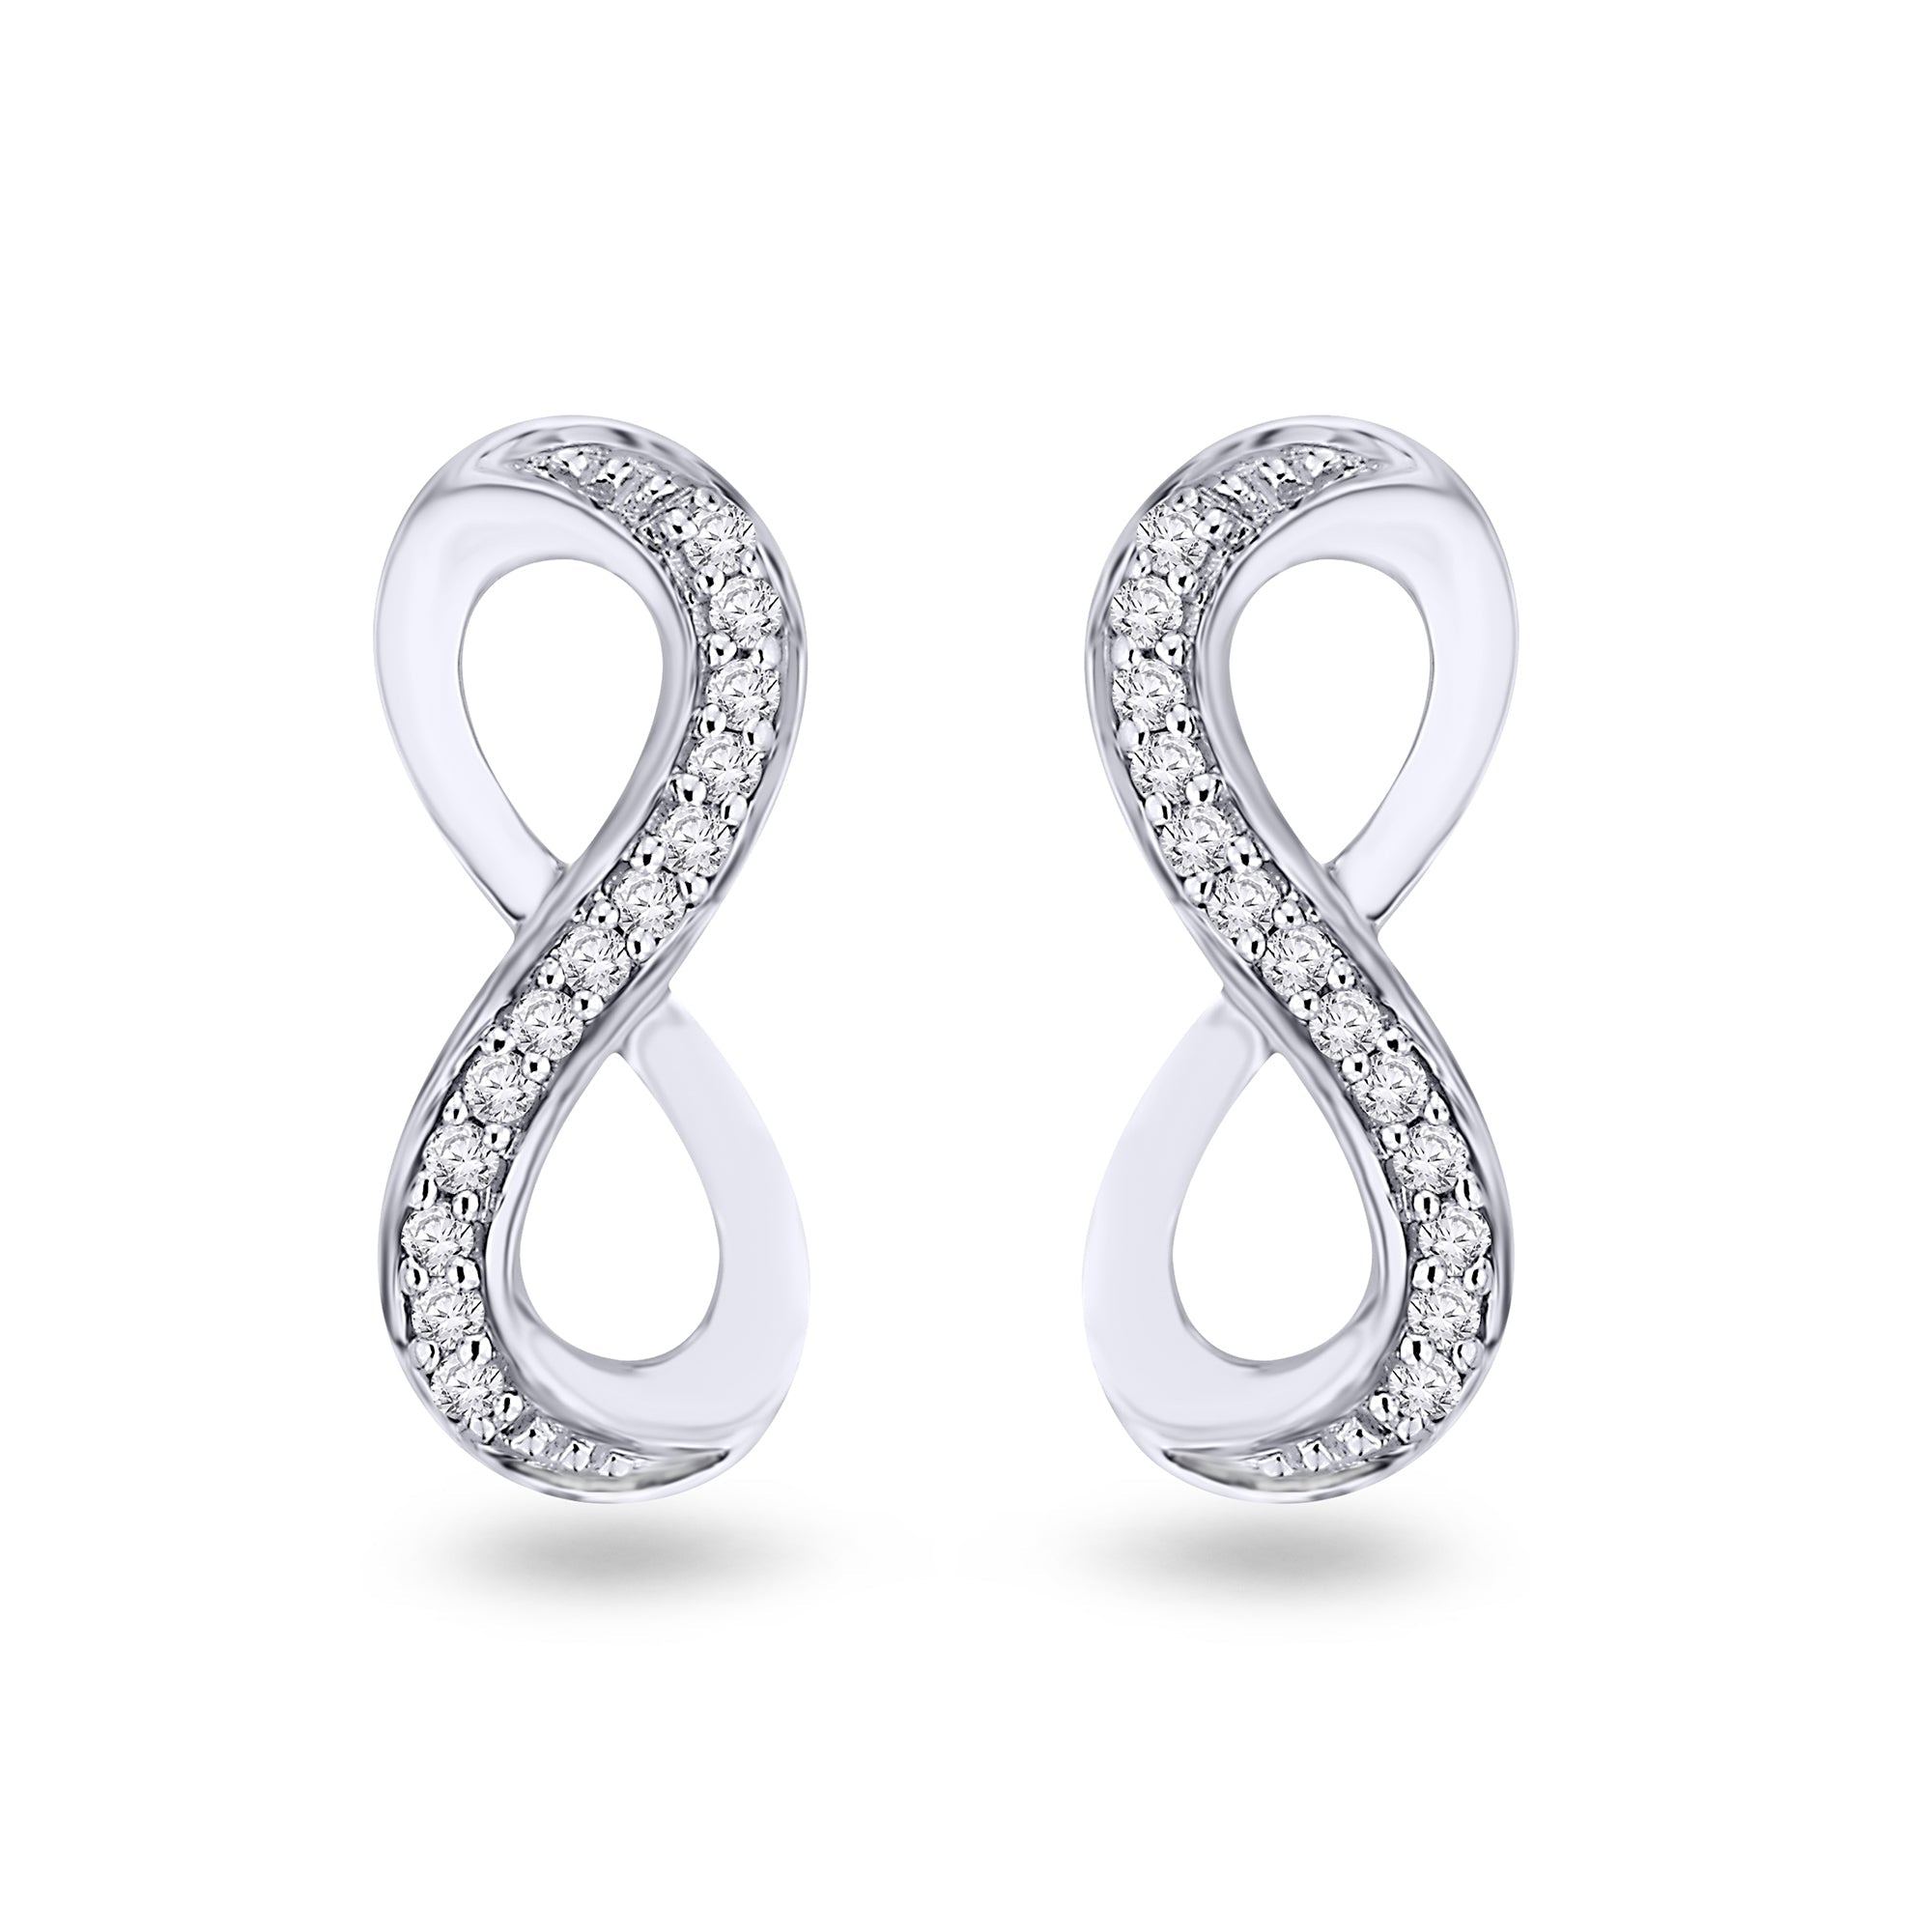 9ct white gold diamond set infinity studs earrings (L - 14mm) 0.10ct